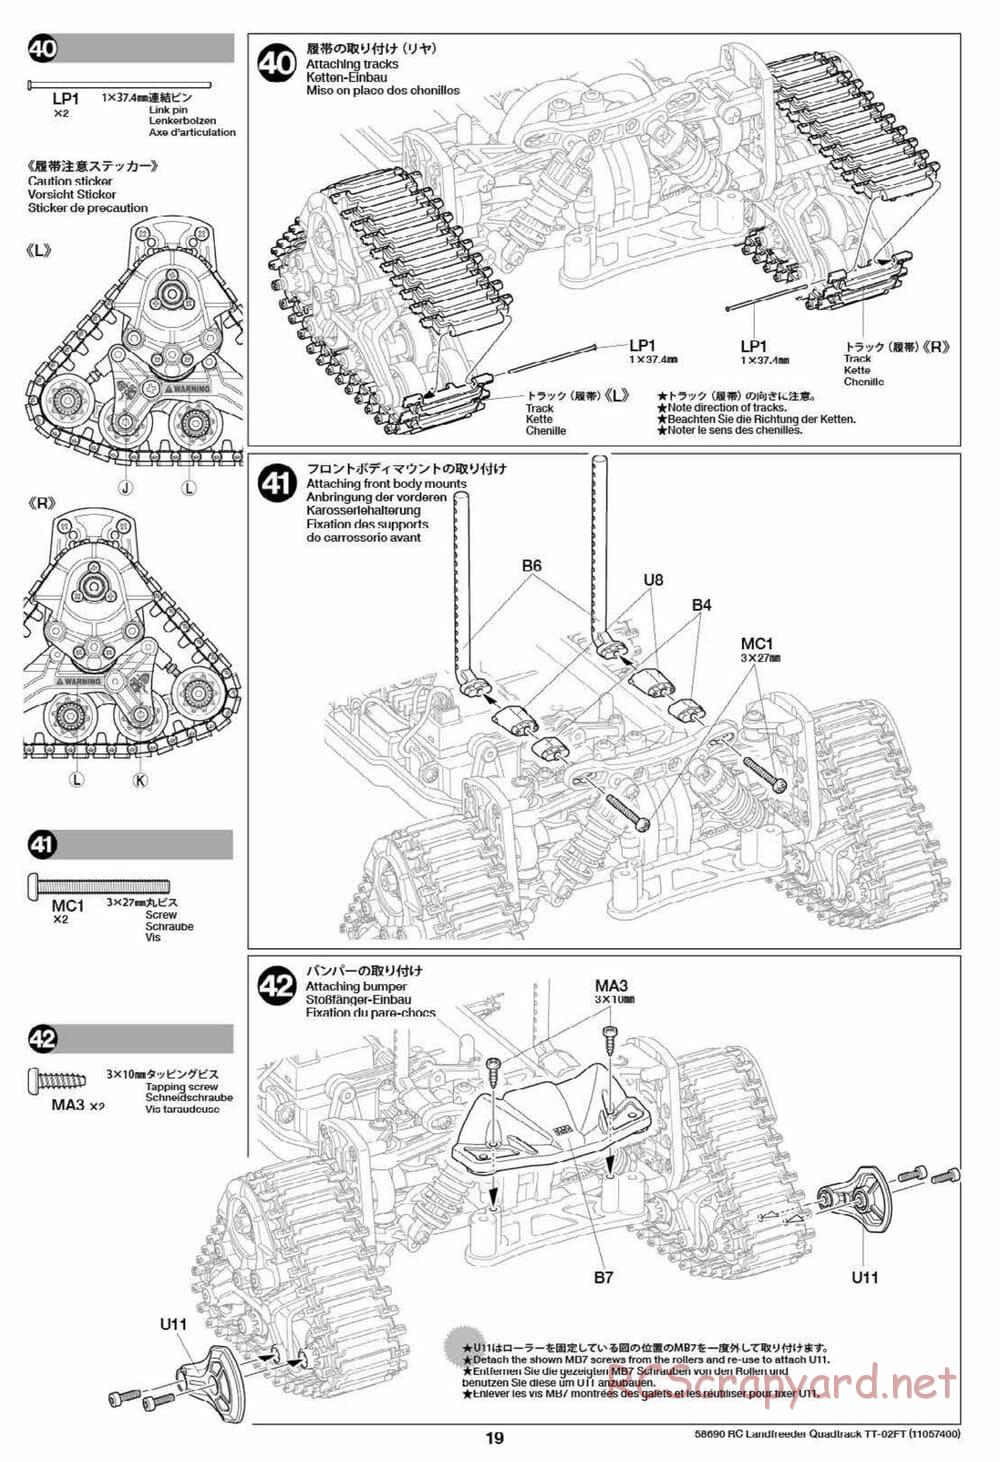 Tamiya - Landfreeder Quadtrack - TT-02FT Chassis - Manual - Page 19